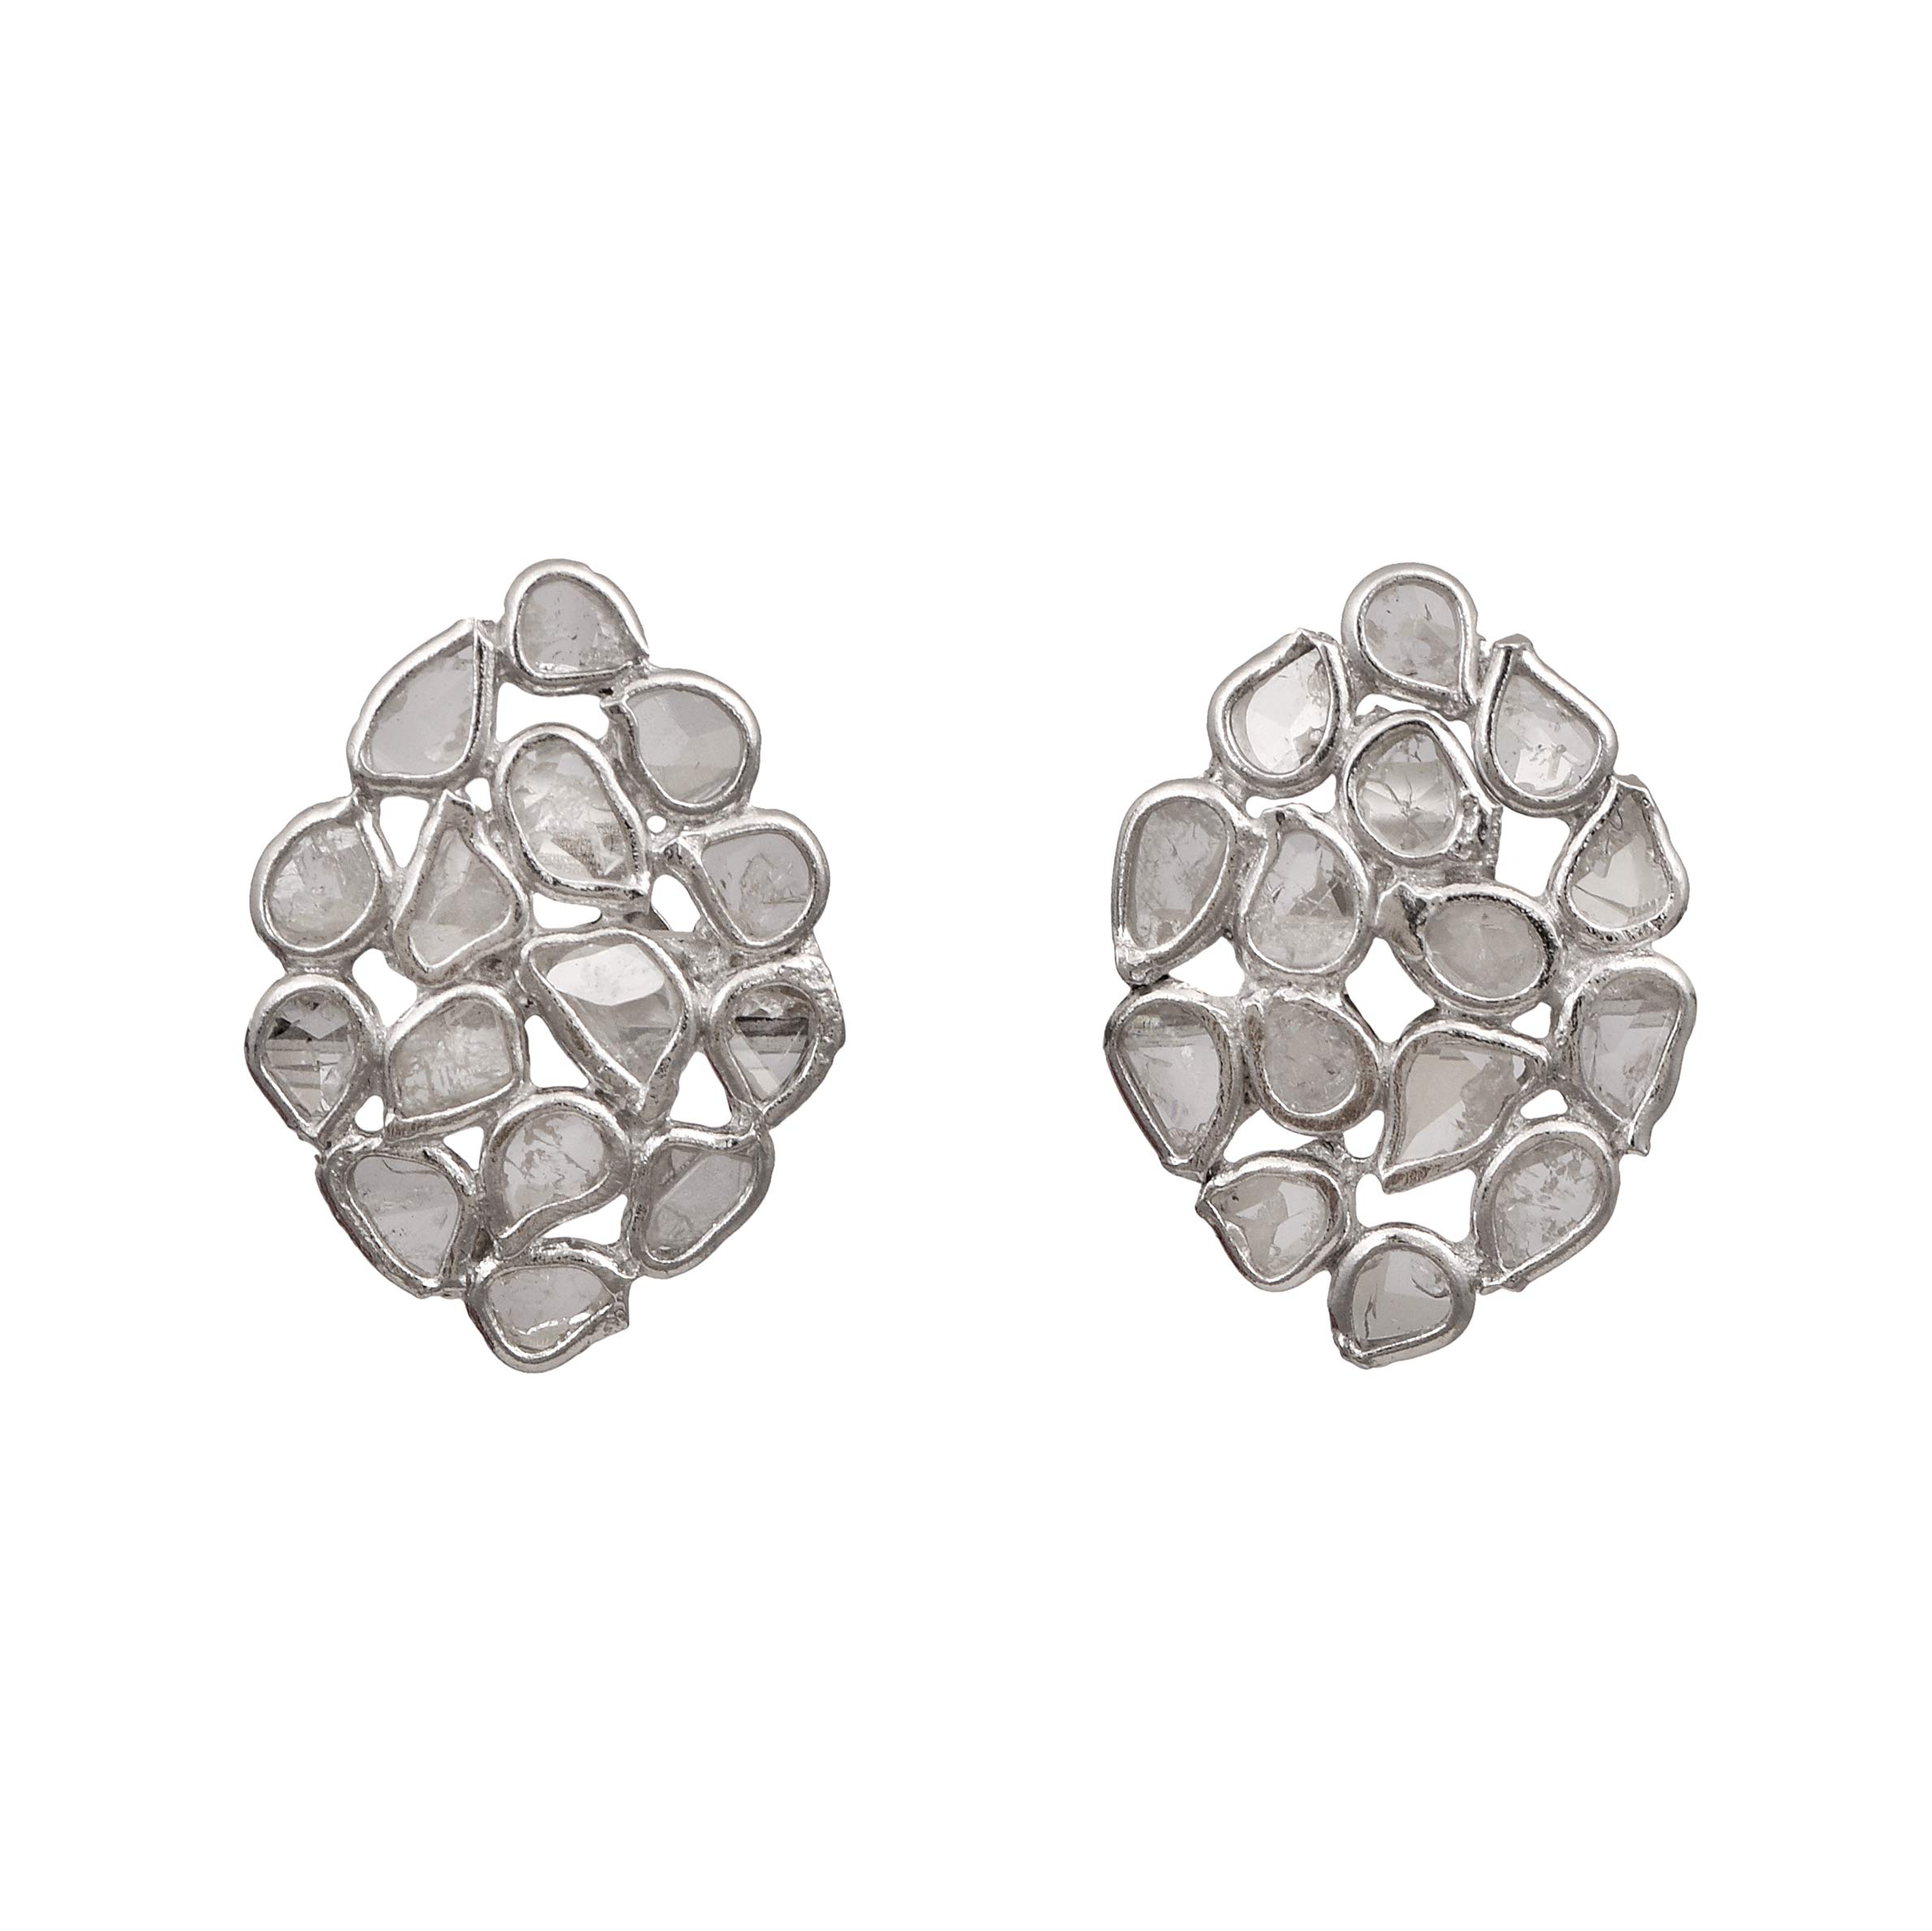 1.20 CTW Natural Uncut slice diamond polki tinny designer stud earrings - 925 sterling silver platinum plated